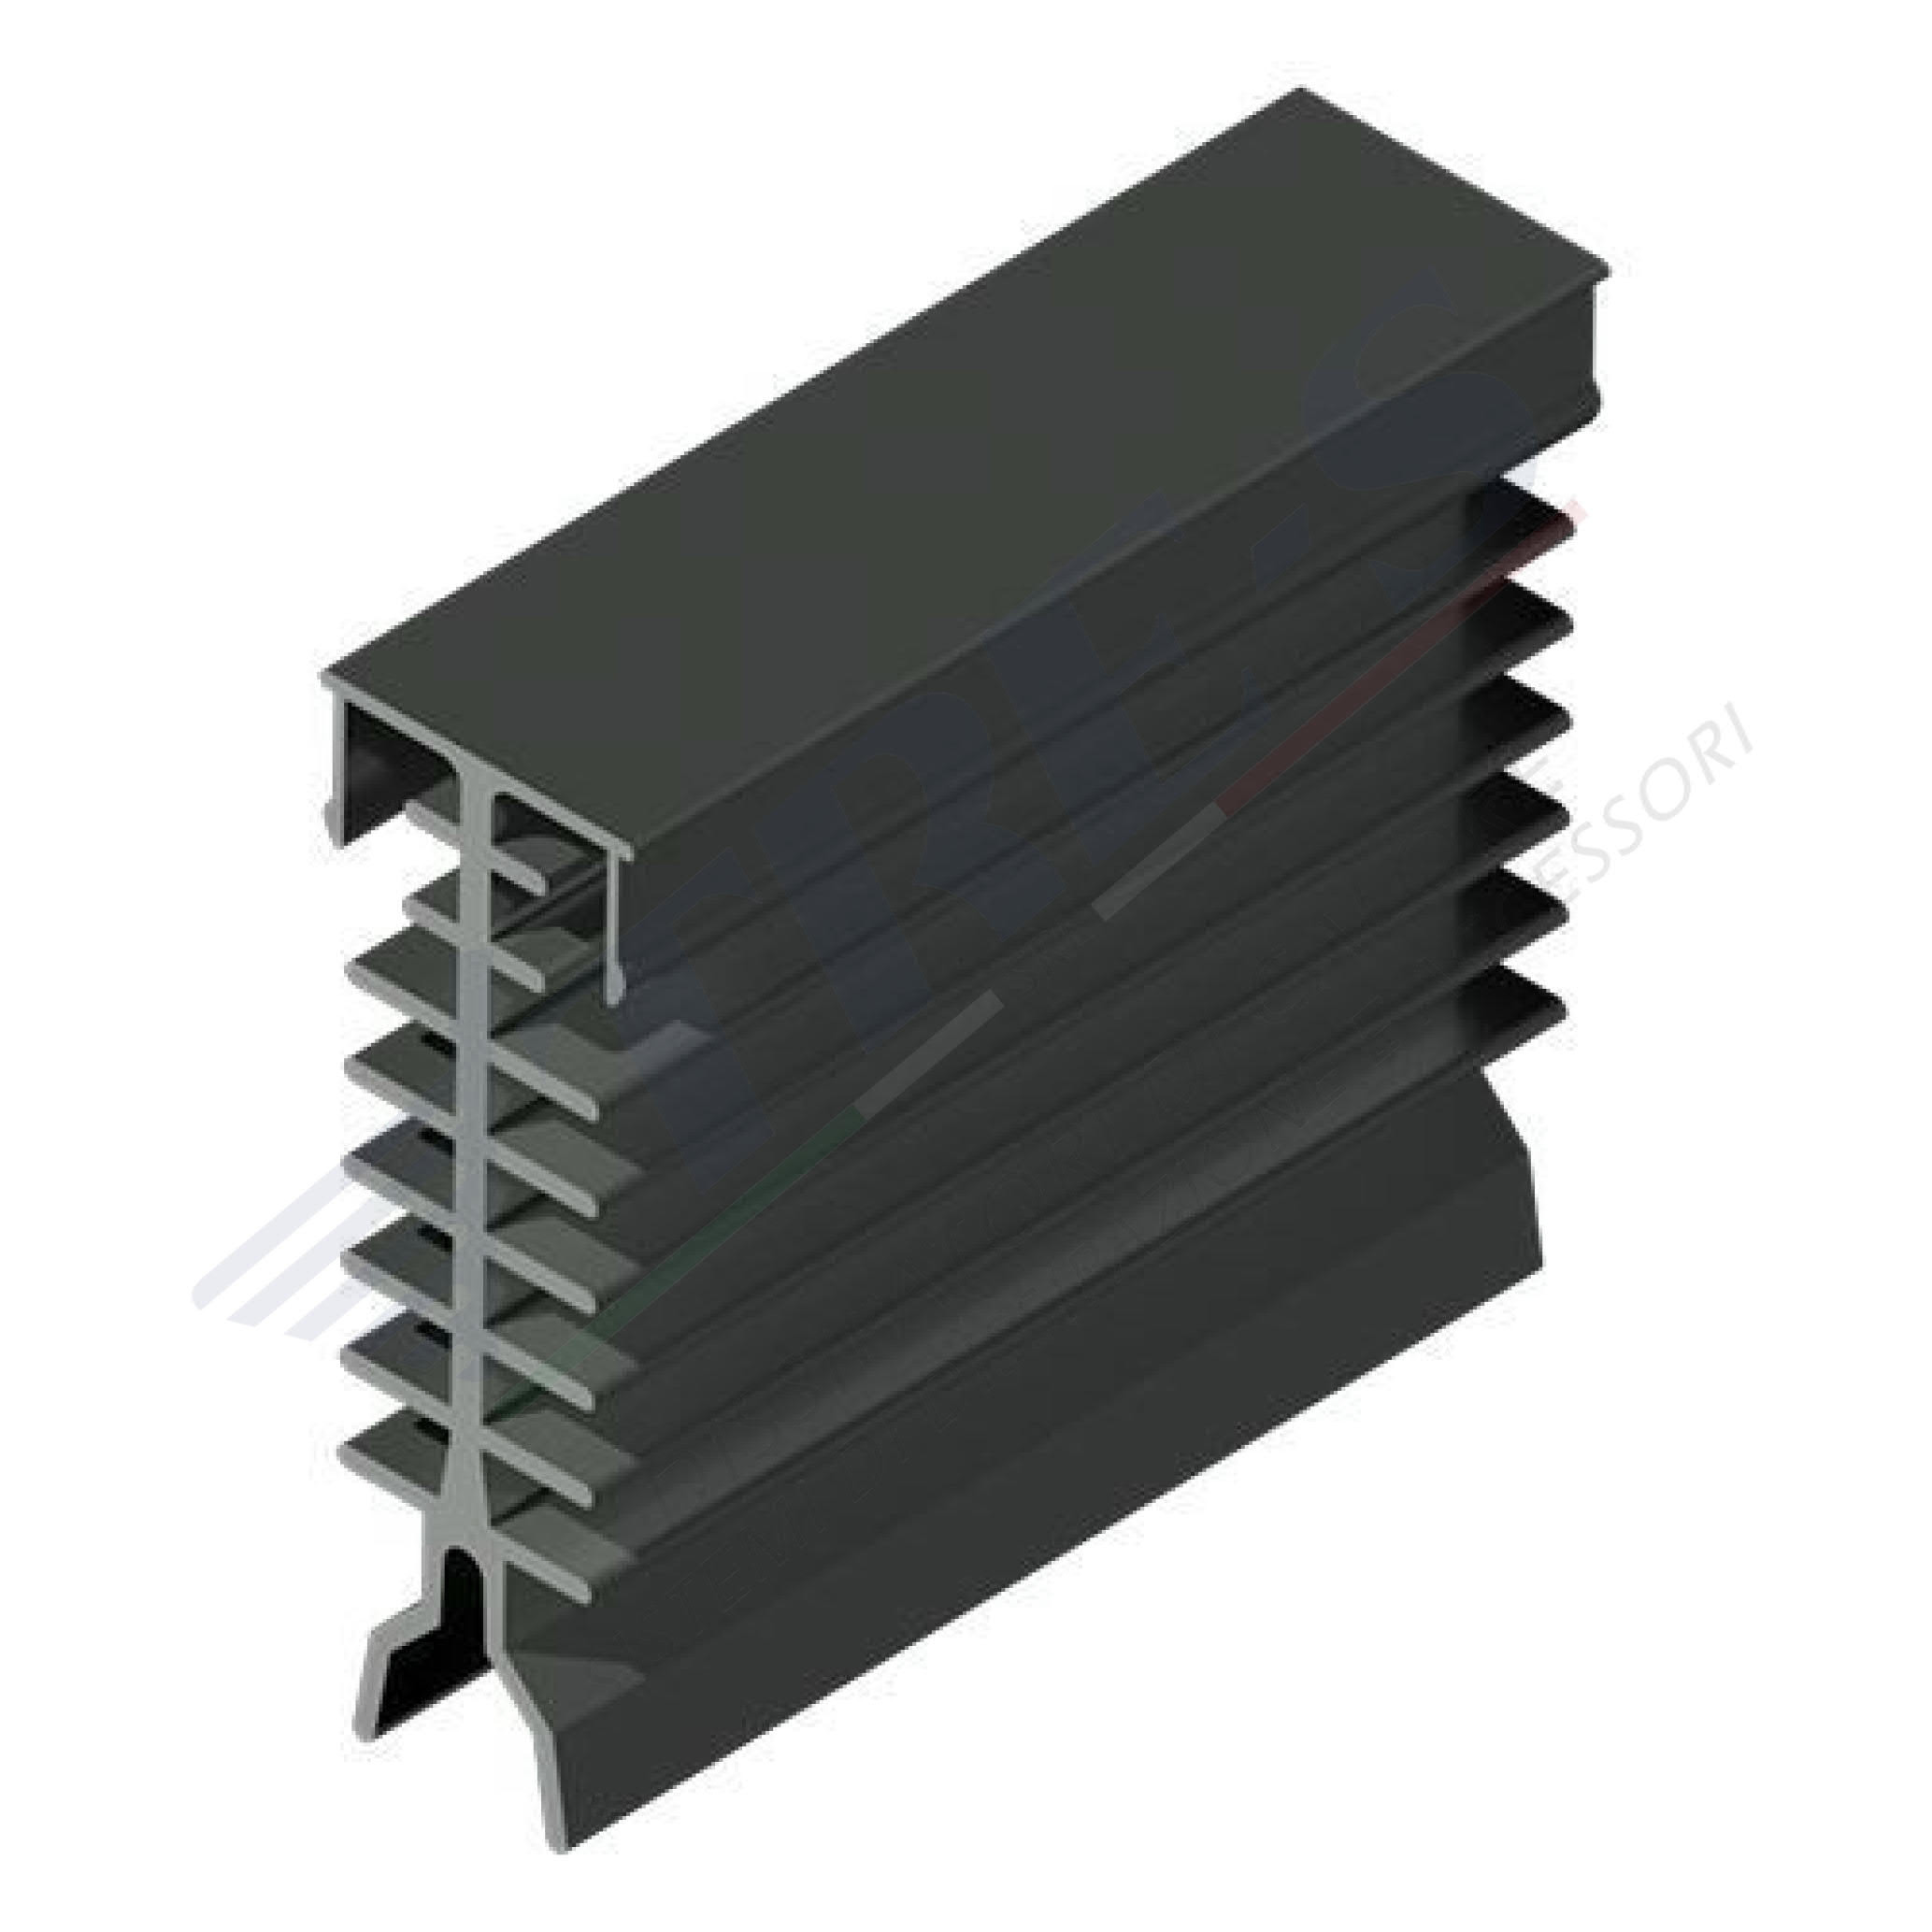 PRO1240 - Heat sinks for power modules